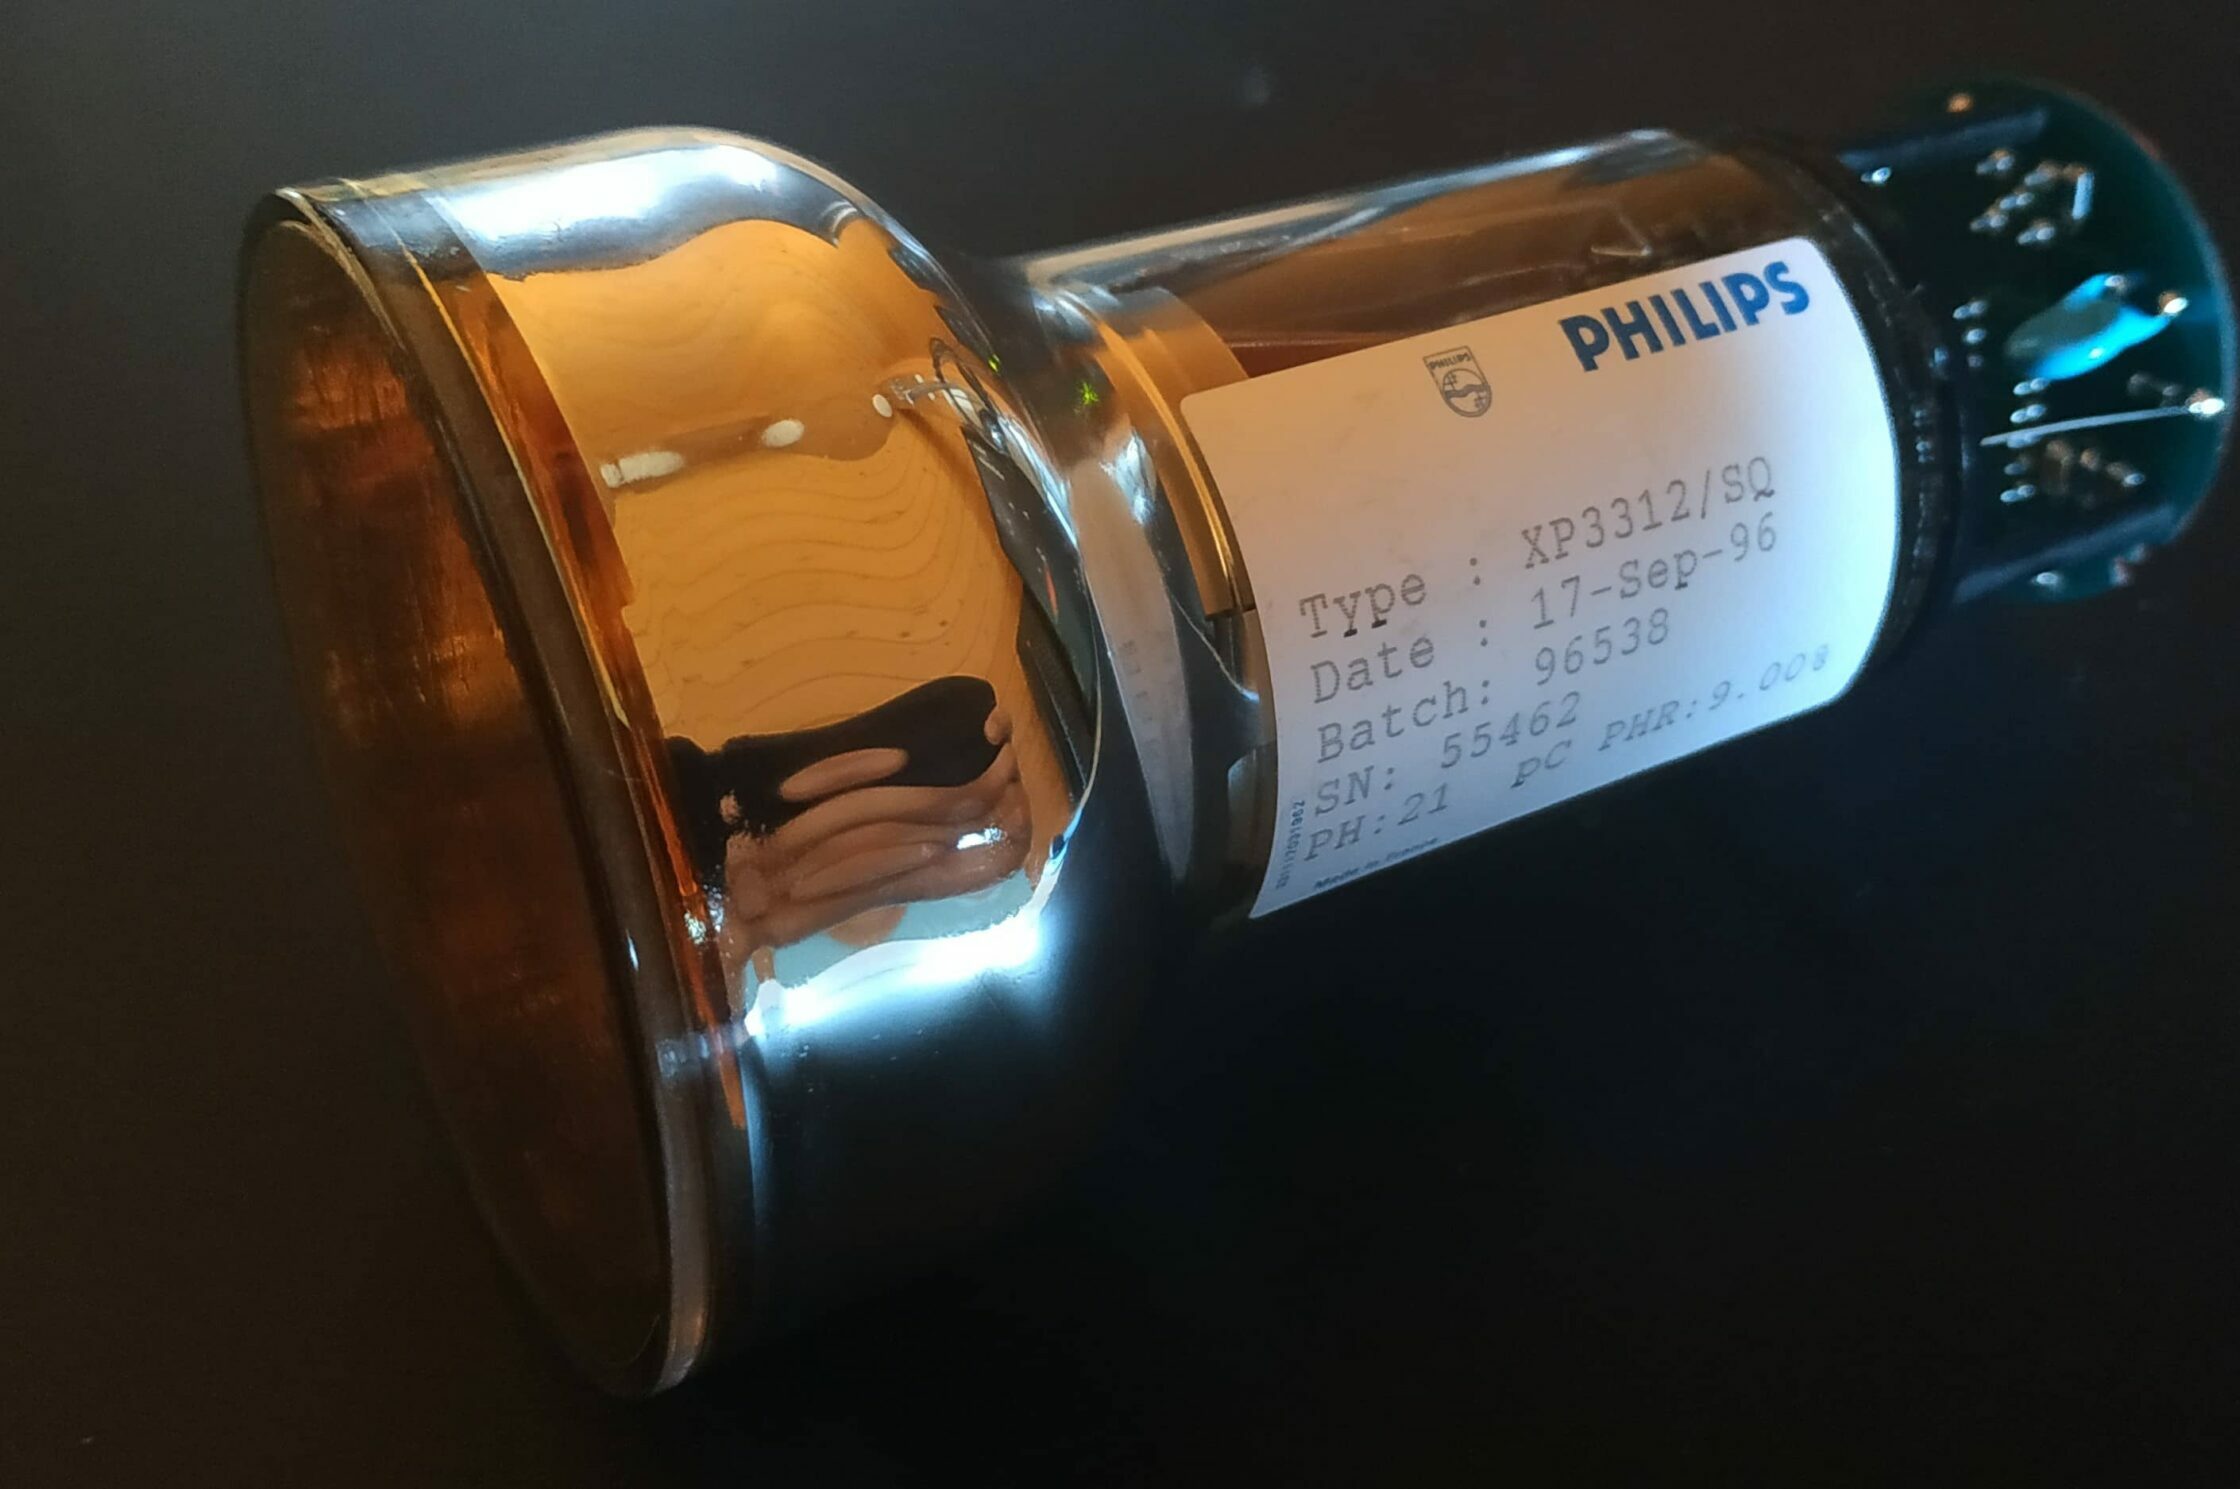 Philips Photonis XP3312 Photomultiplier